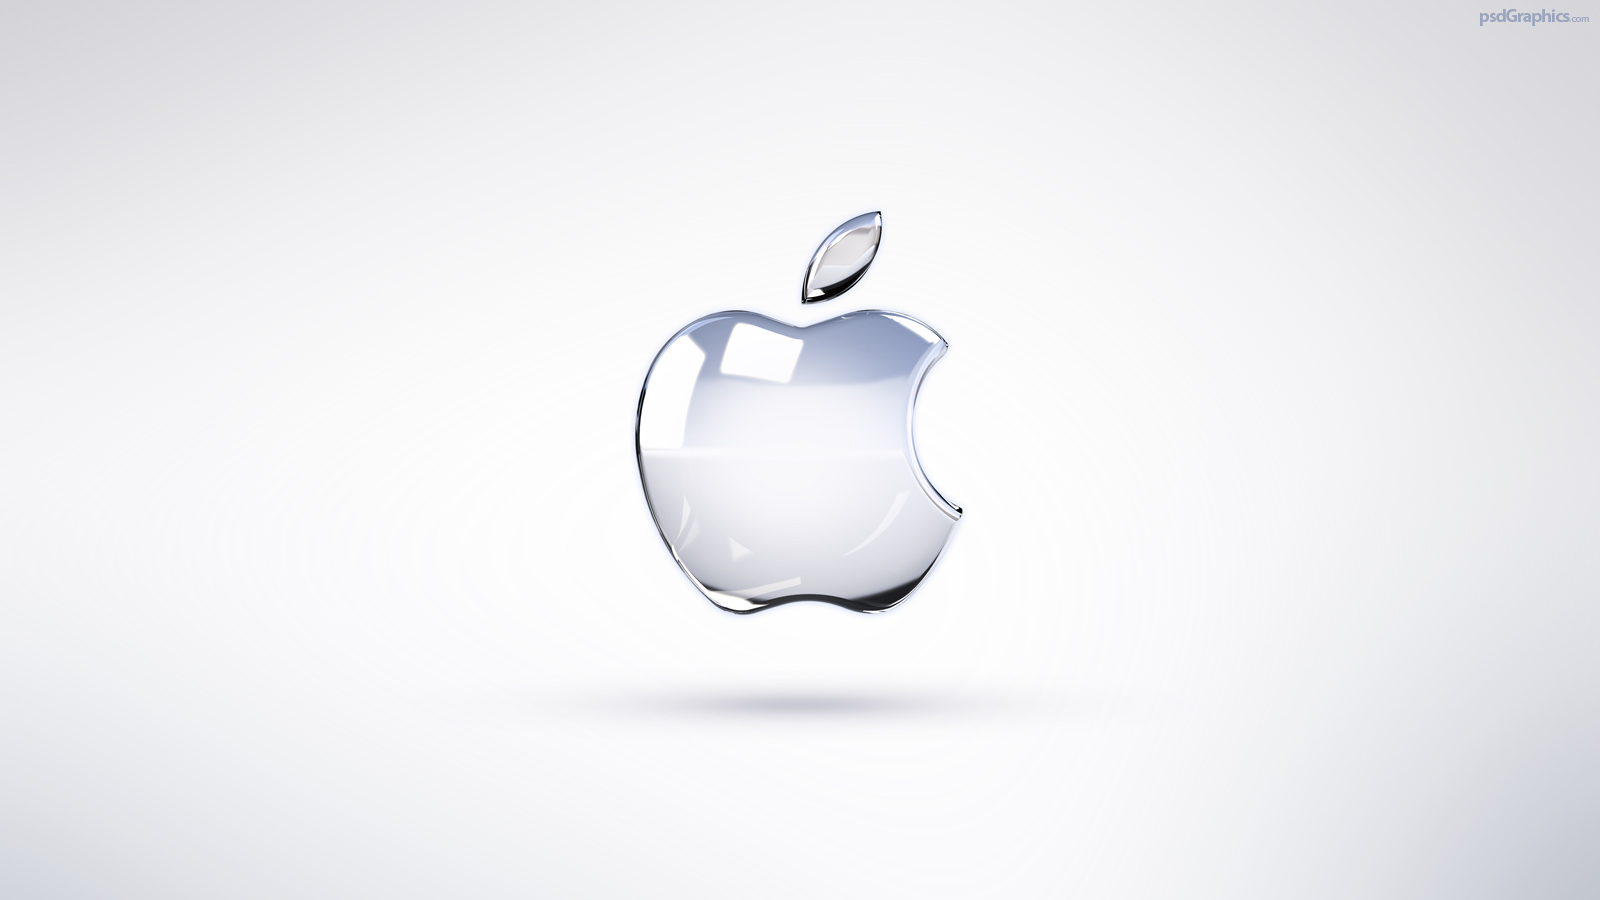 Silver Apple Logo